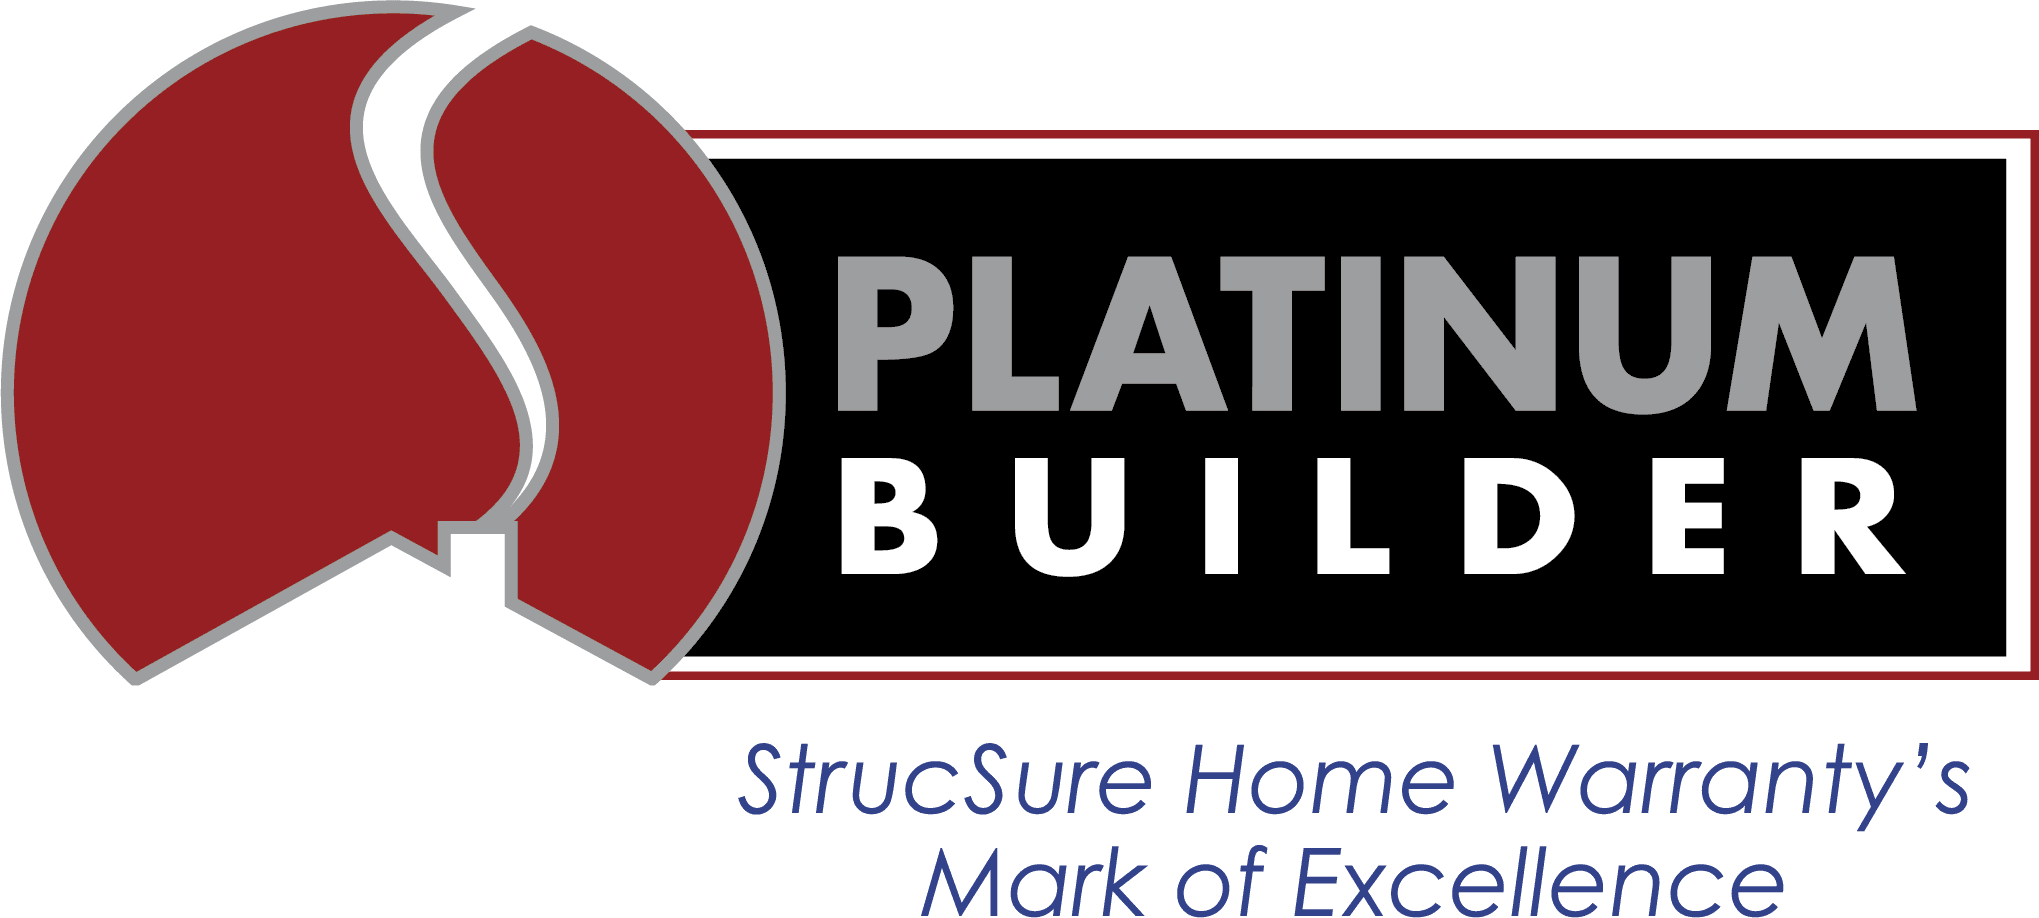 Platinum Builder Assets - StrucSure Home Warranty